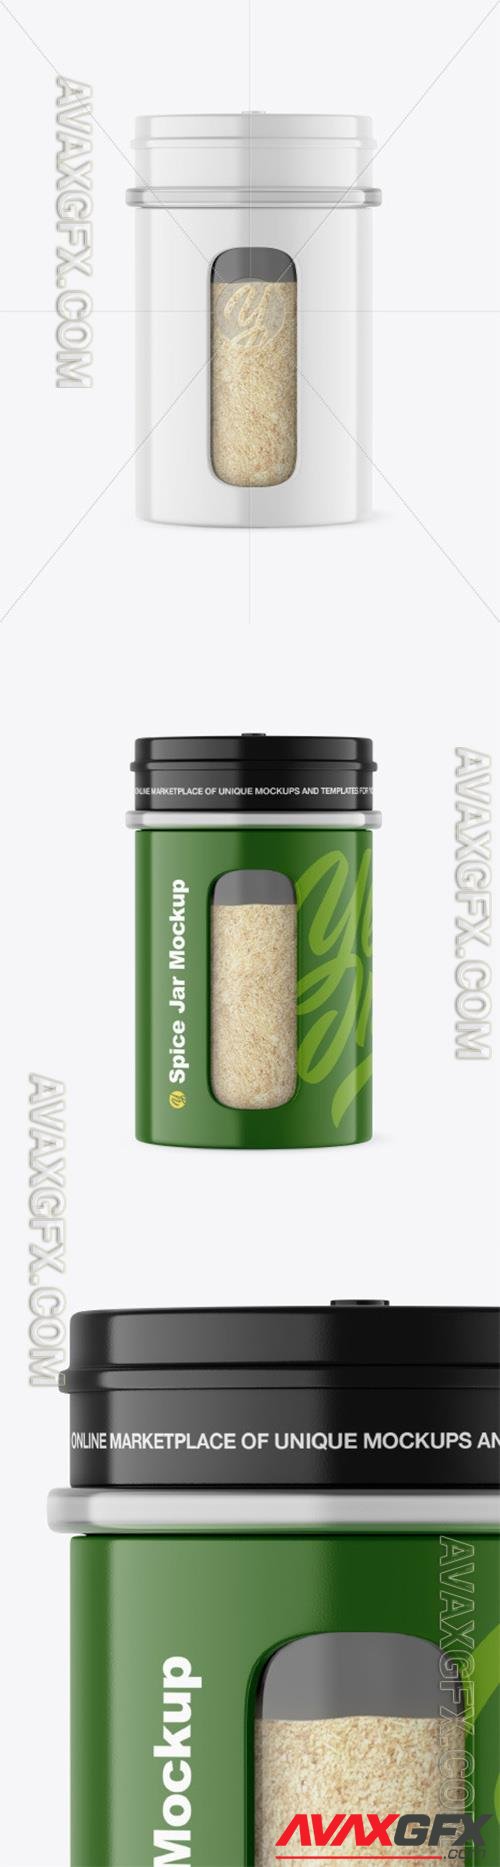 Glossy Spice Jar w/ Granulated Garlic Mockup 88934 TIF